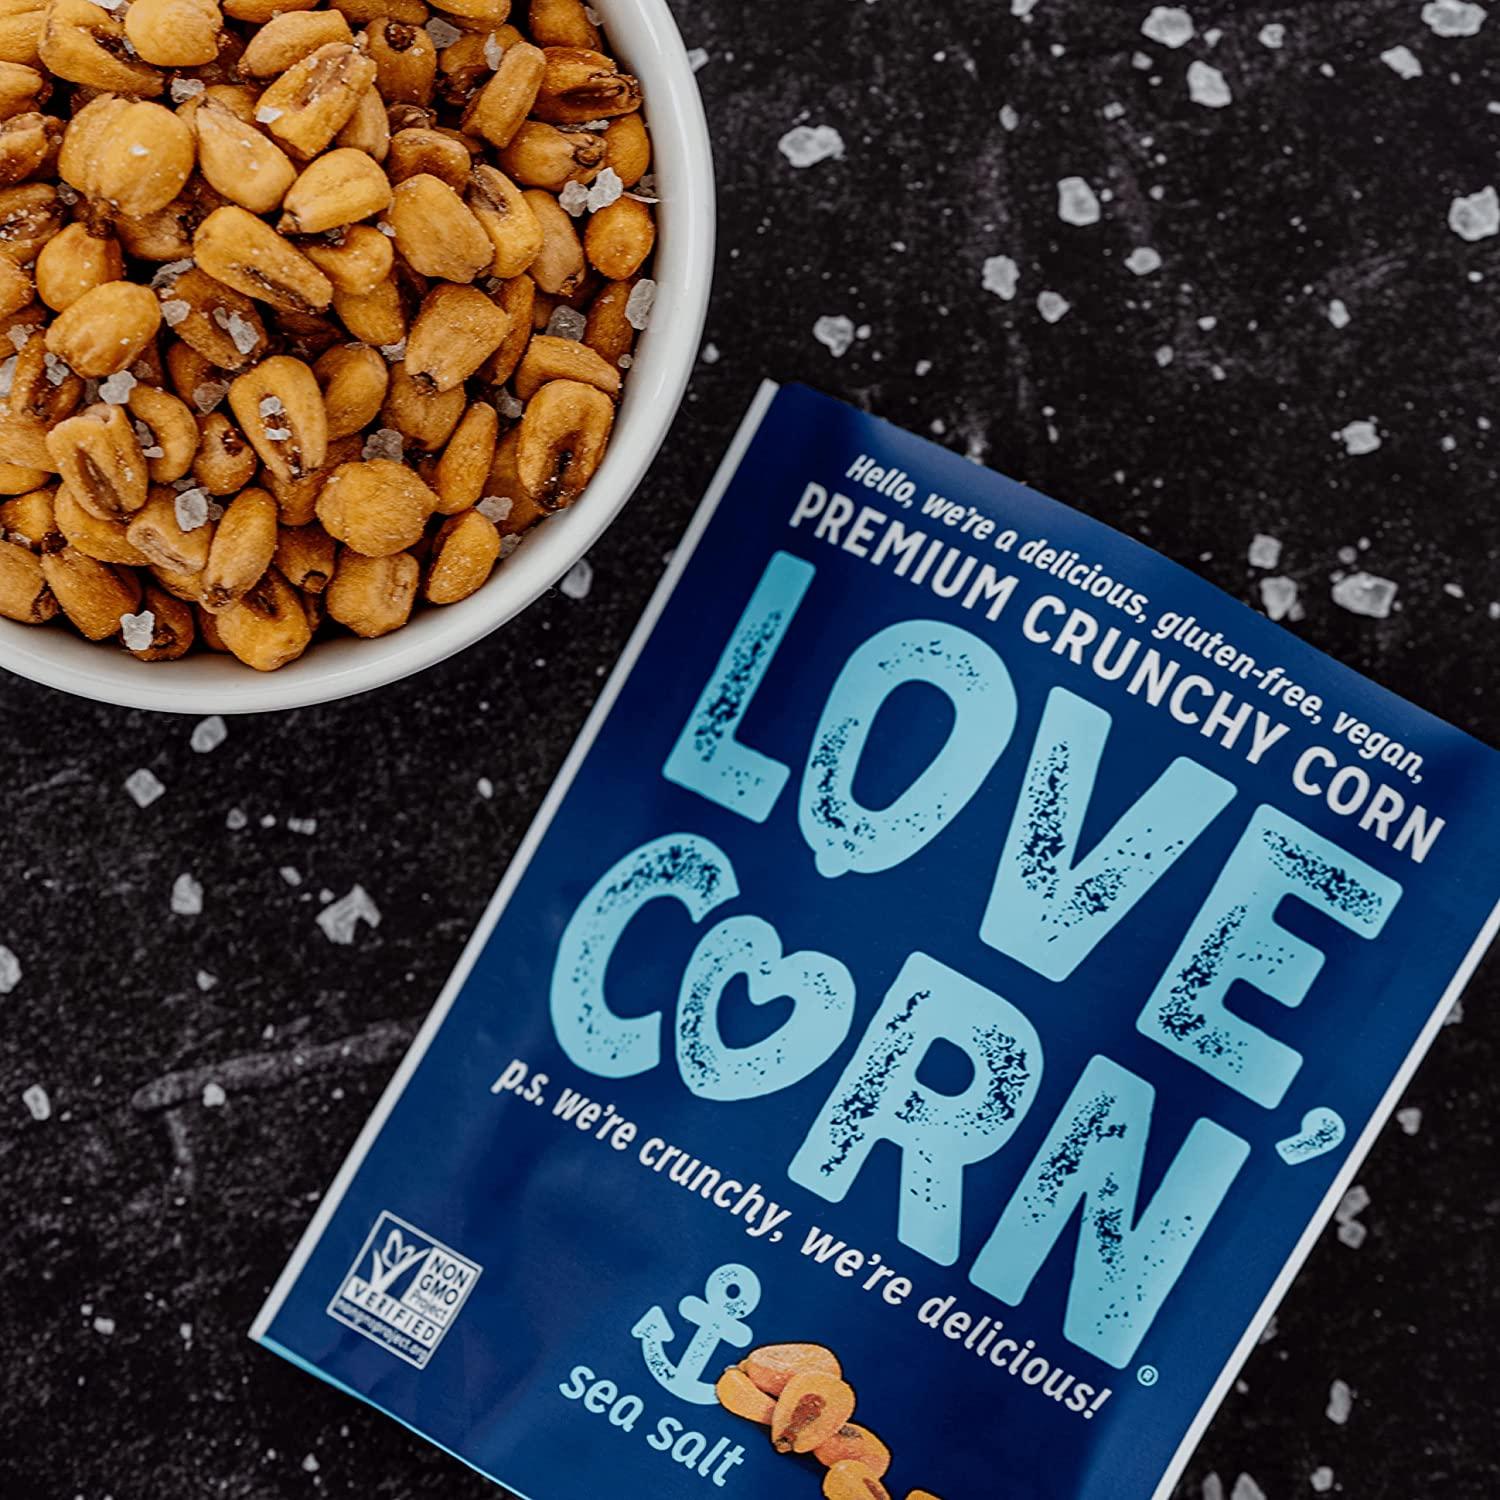 Love Corn Crunchy Corn Variety Pack